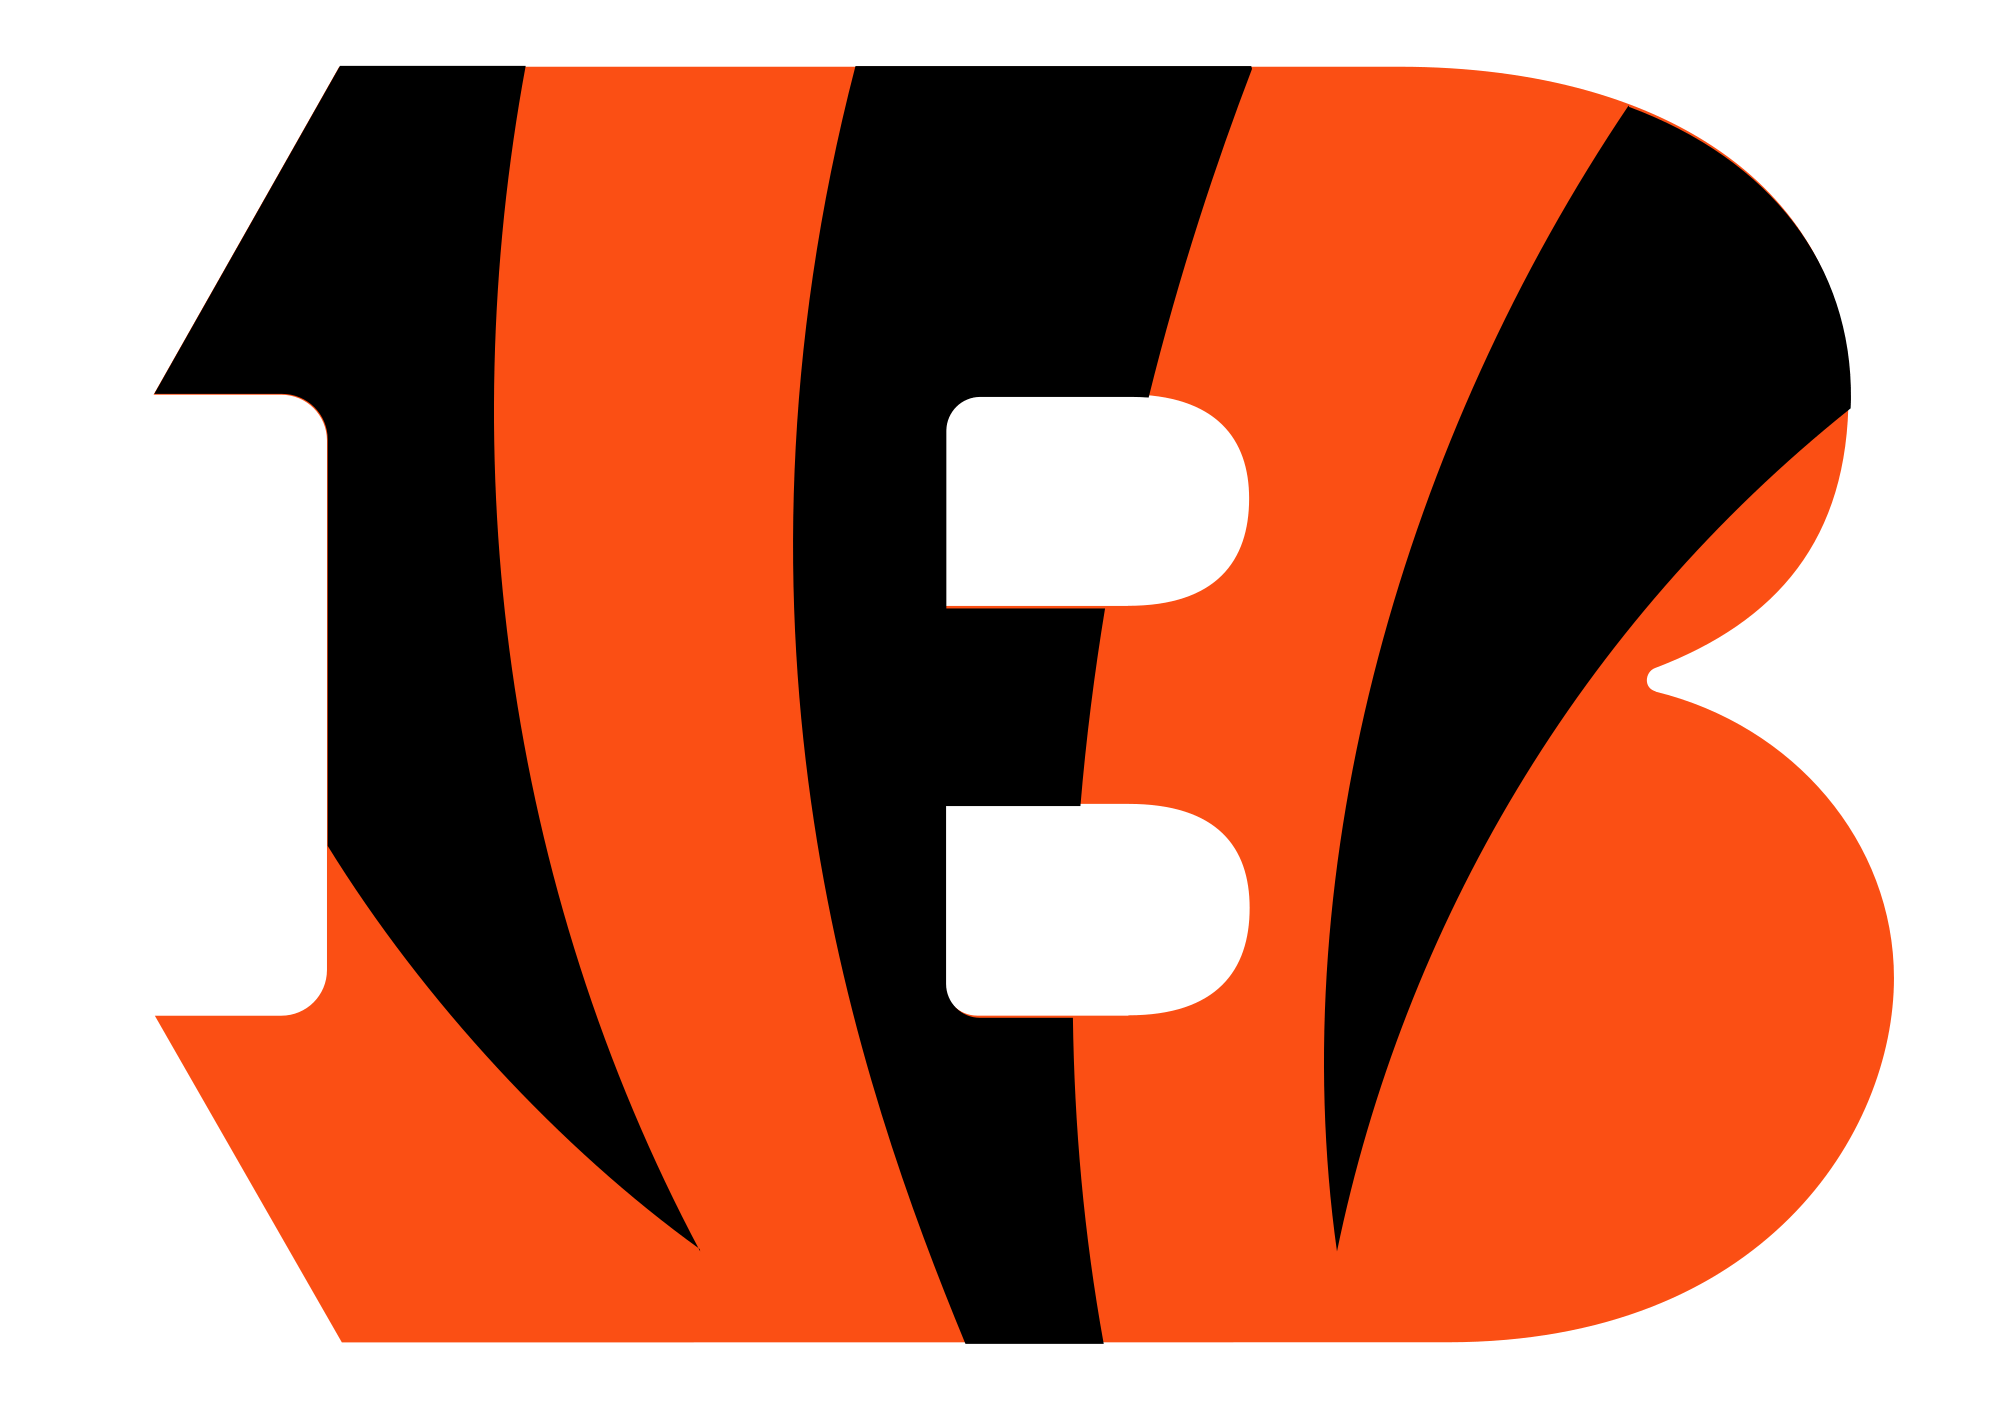 Cincinnati Logo - File:Cincinnati Bengals logo.svg - Wikimedia Commons